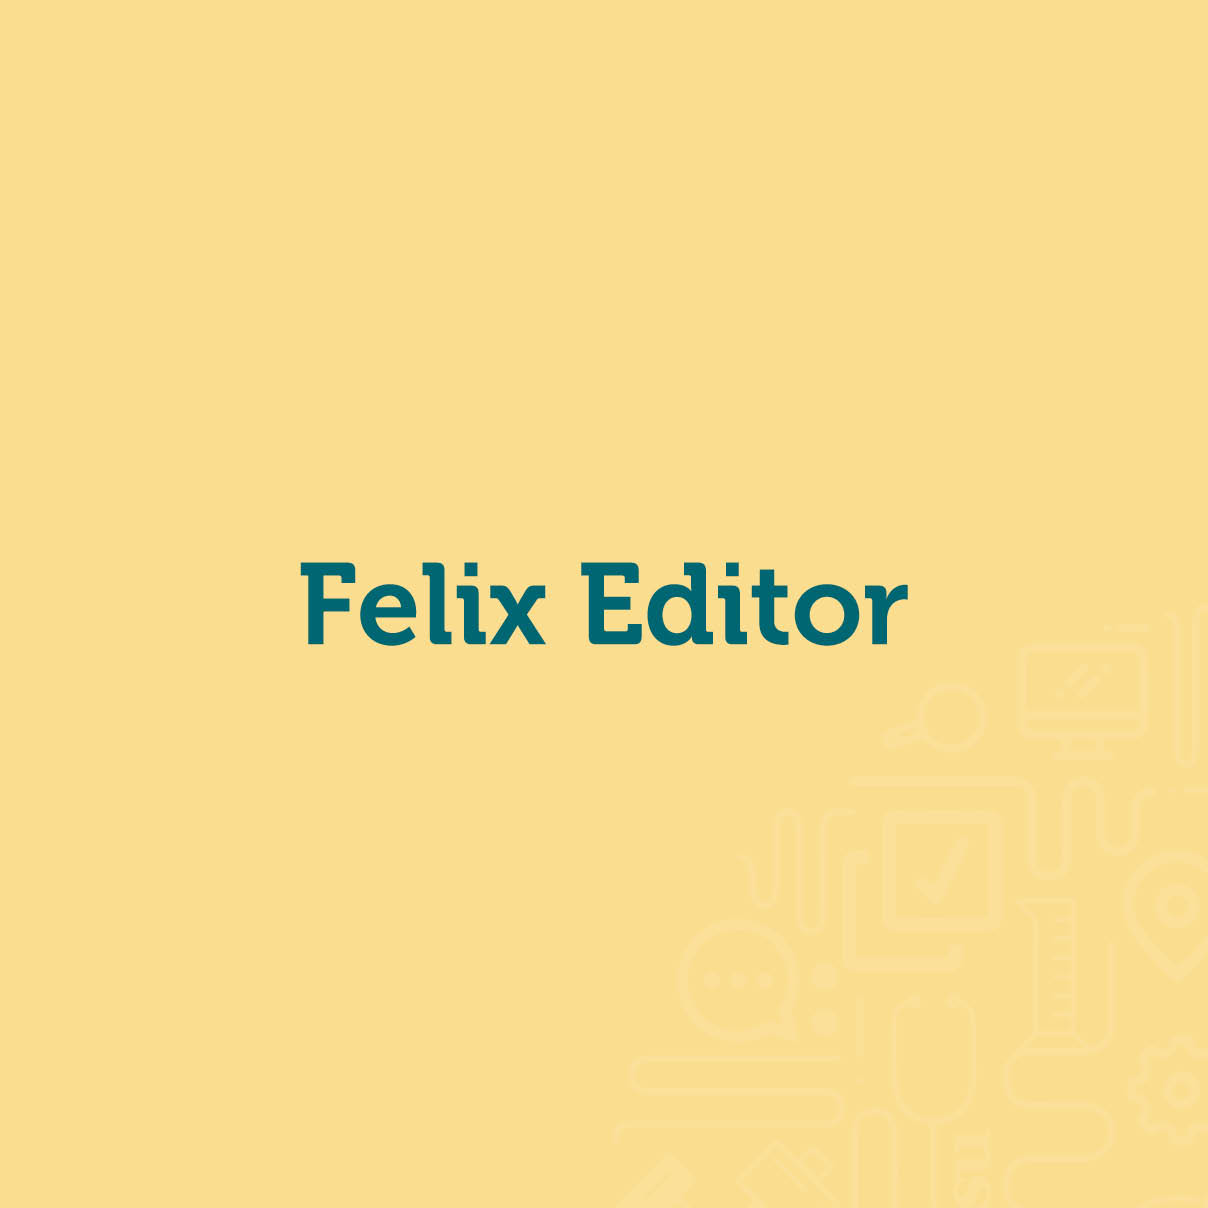 Felix Editor